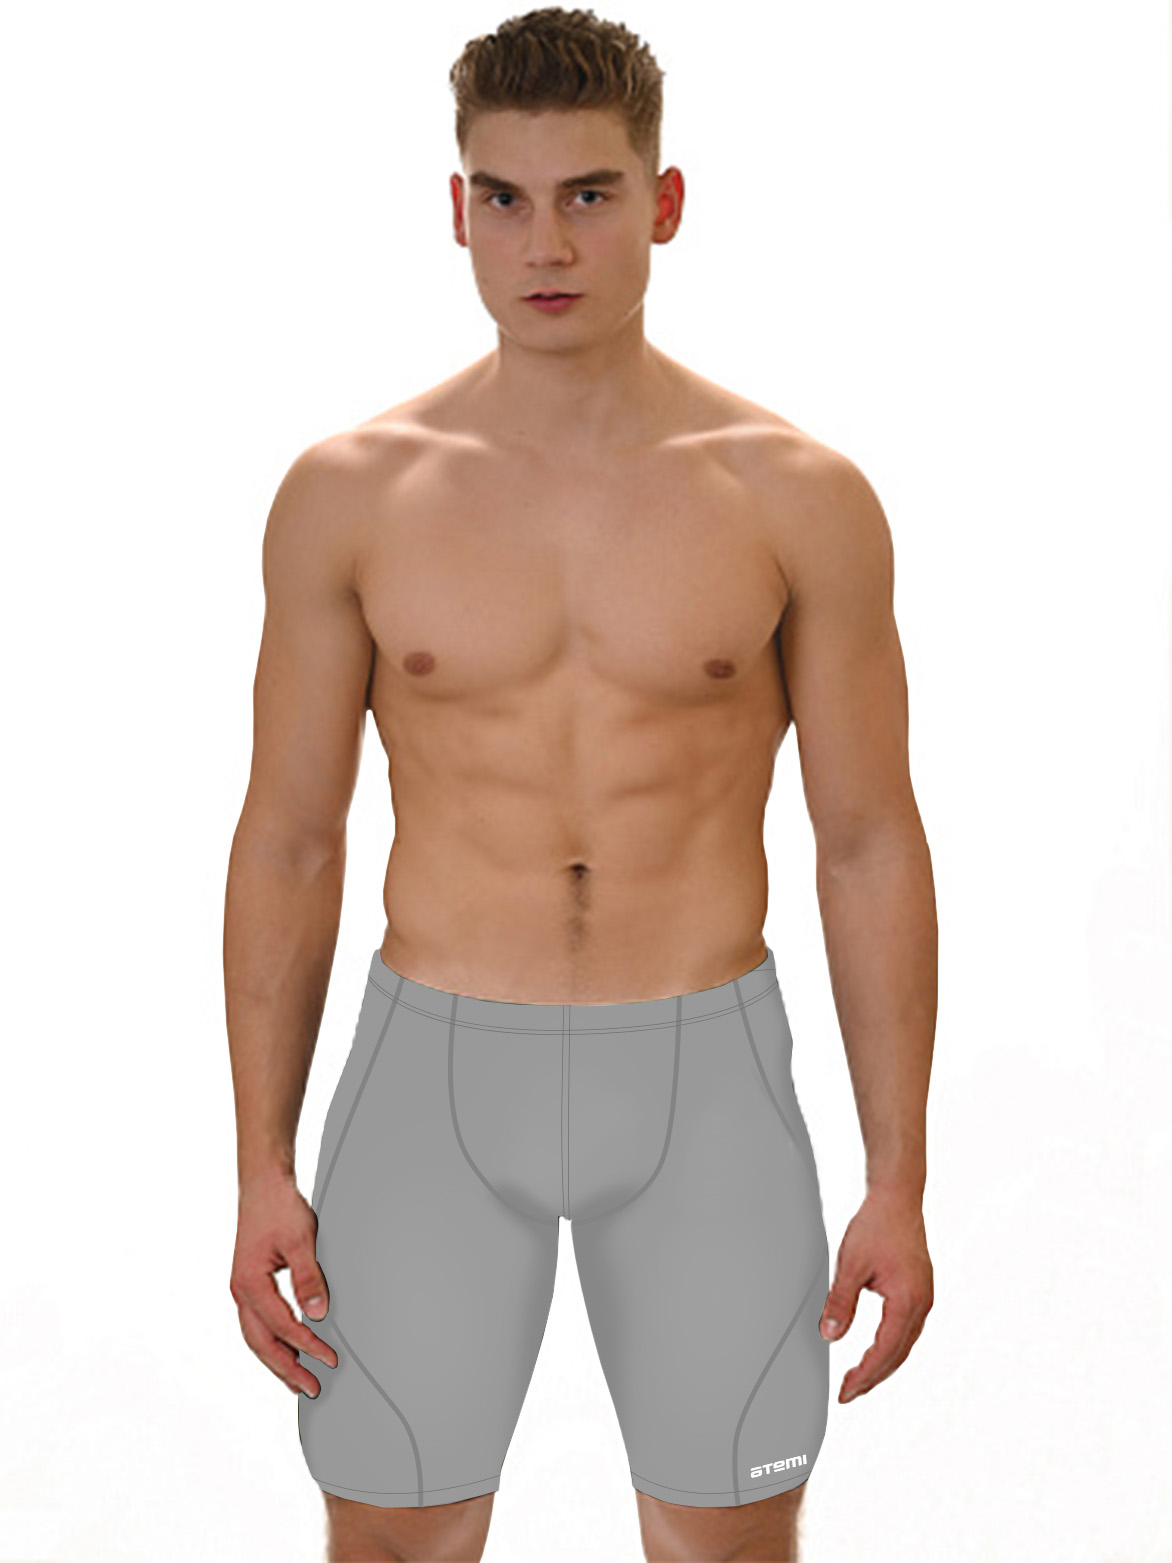 Плавки-шорты мужские спортивные, серый, антихлор, р-р 56, TSAP01G